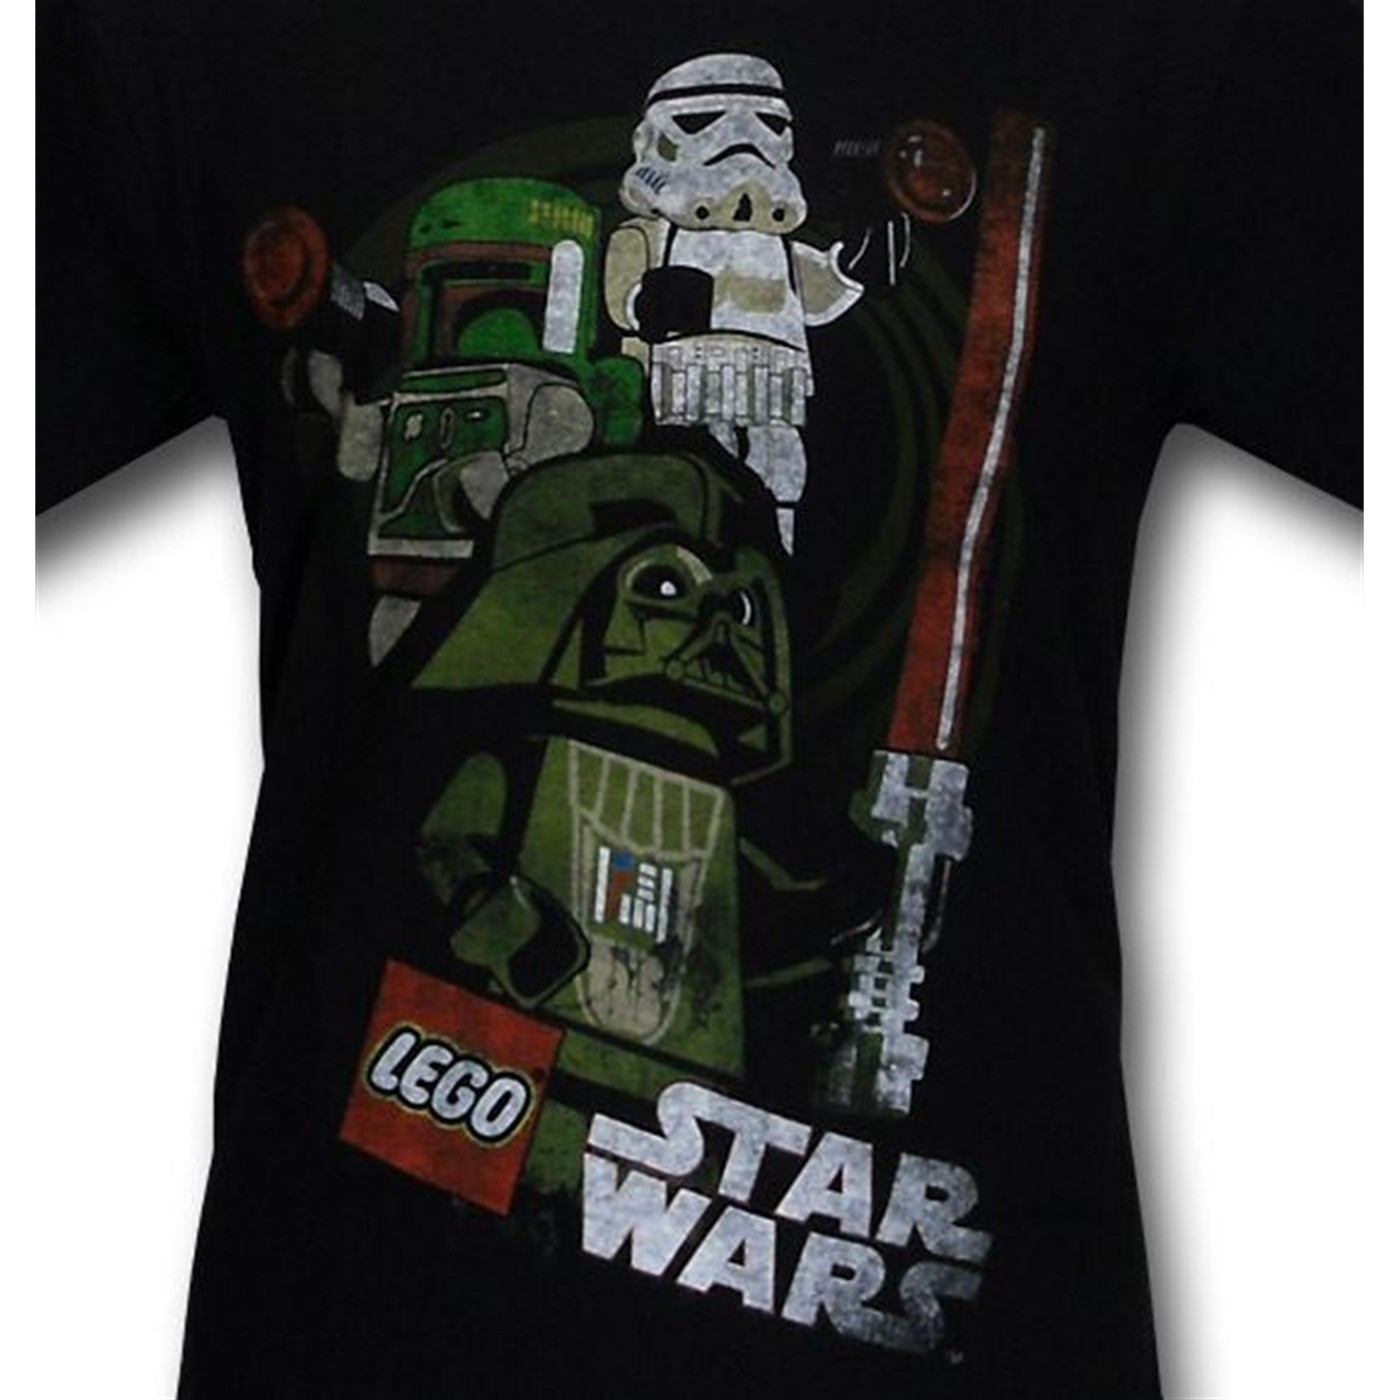 Star Wars Youth Lego Dark Forces T-Shirt